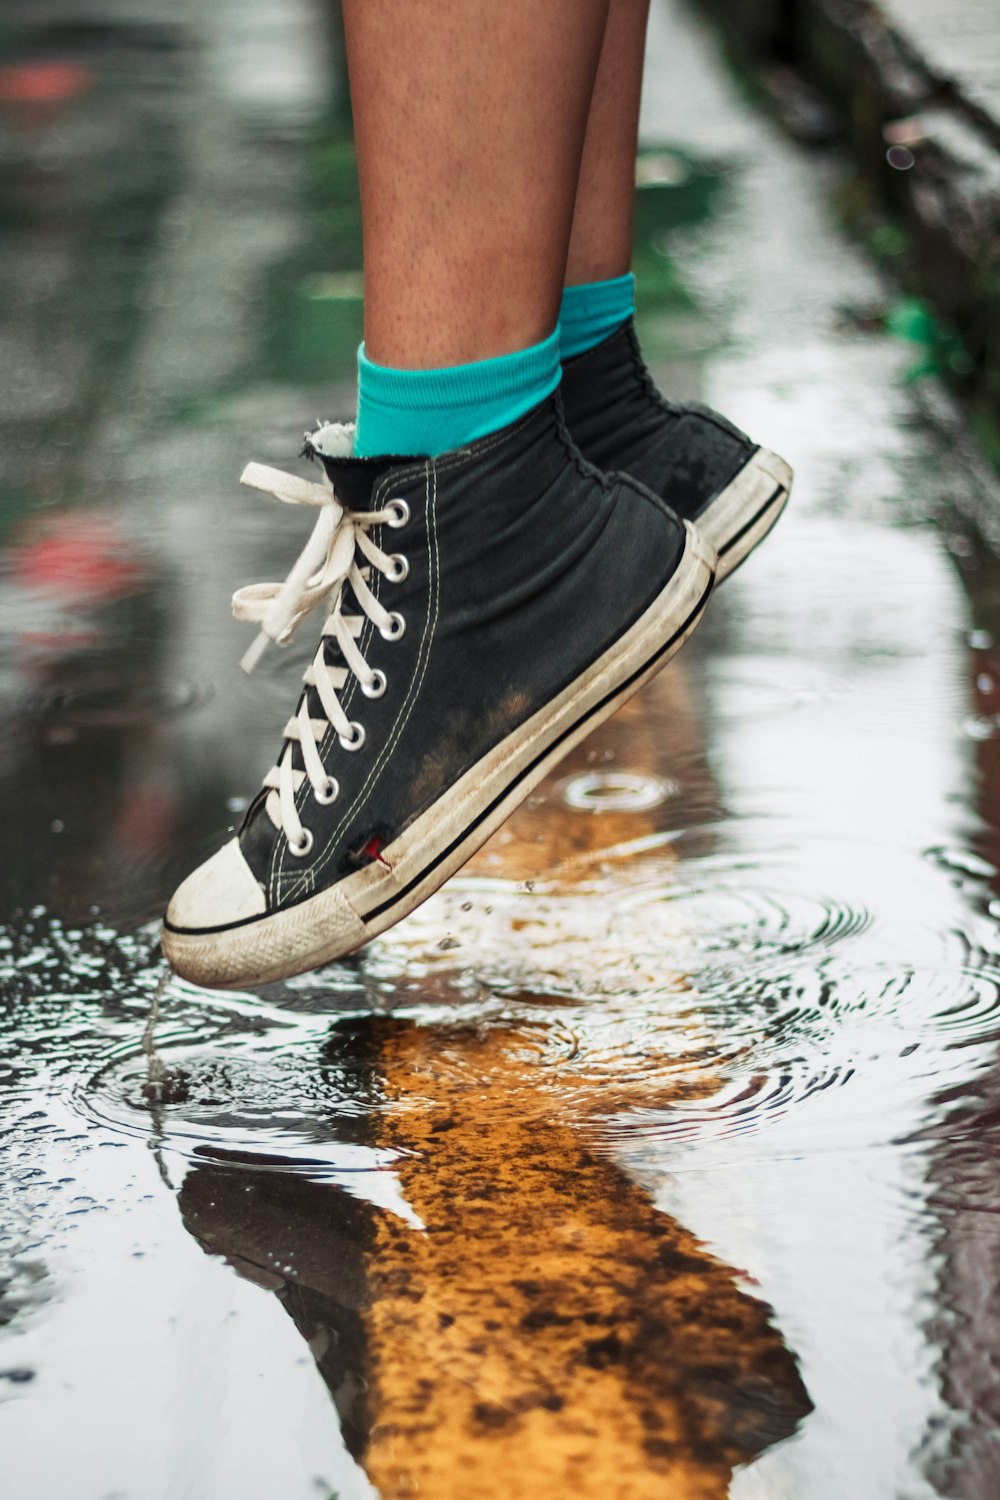 person wearing black high-top sneakers on wet floor